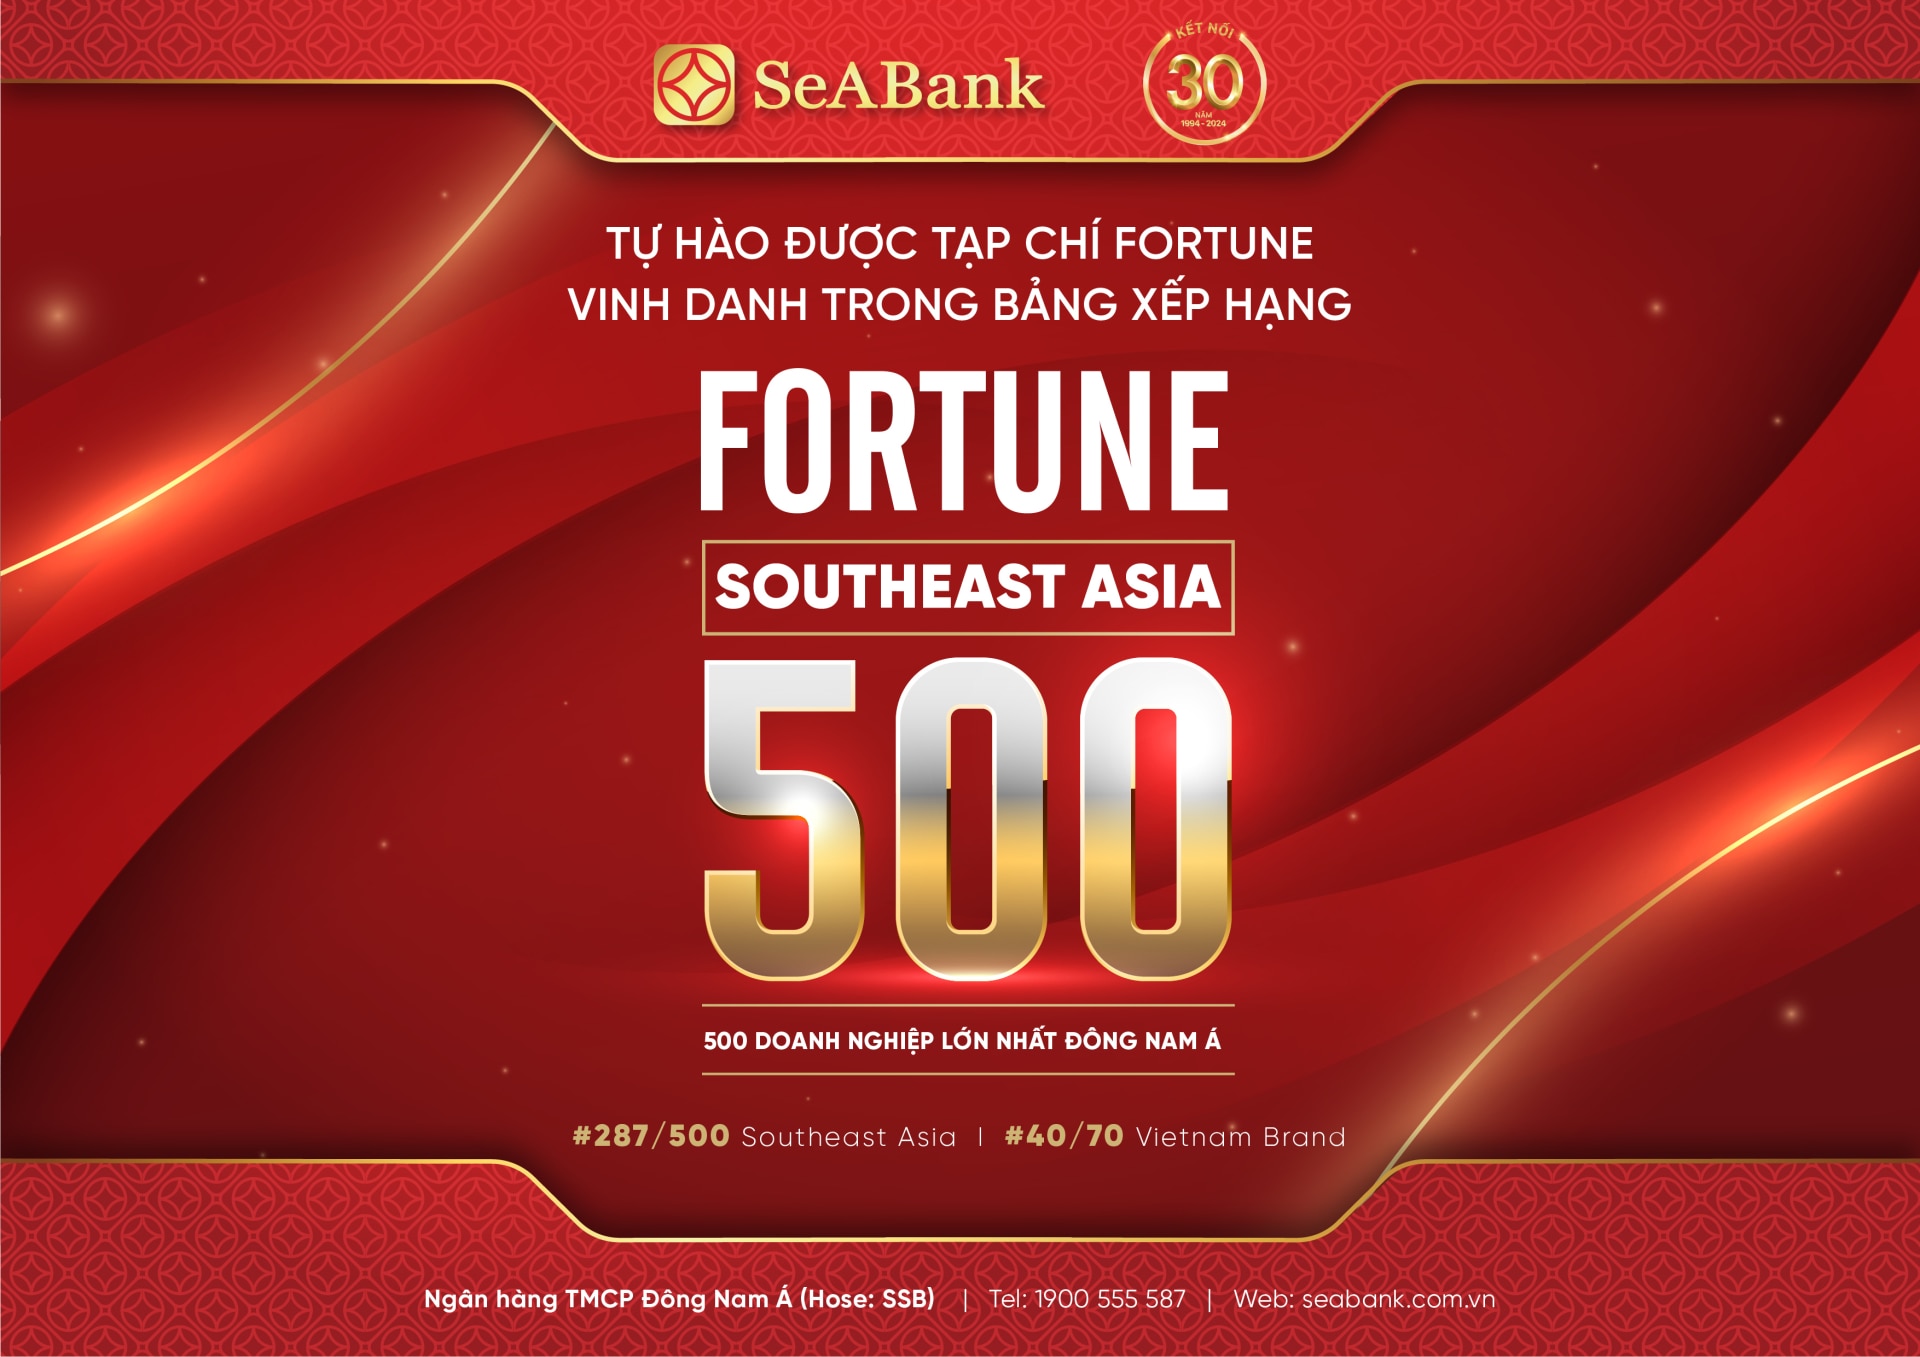 seabank duoc fortune vinh danh trong bang xep hang lan dau cong bo  fortune southeast asia 500 hinh 1